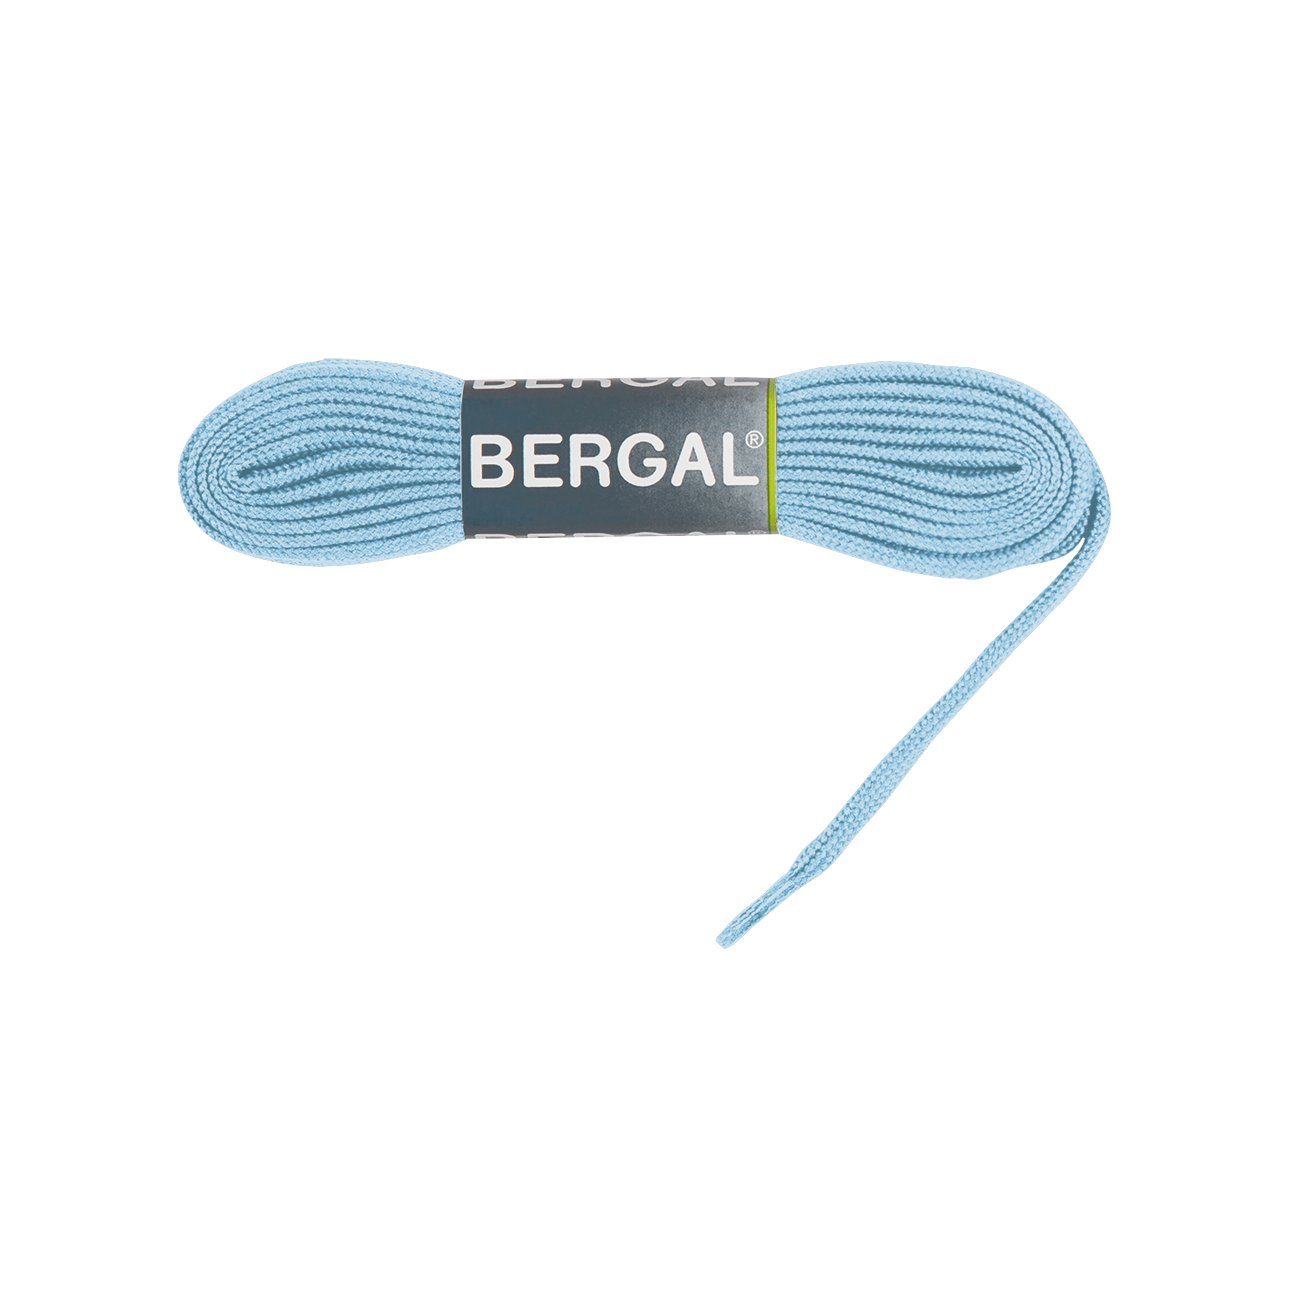 Bergal Schnürsenkel Sneaker Laces - Flach - 10 mm Breit Hellblau